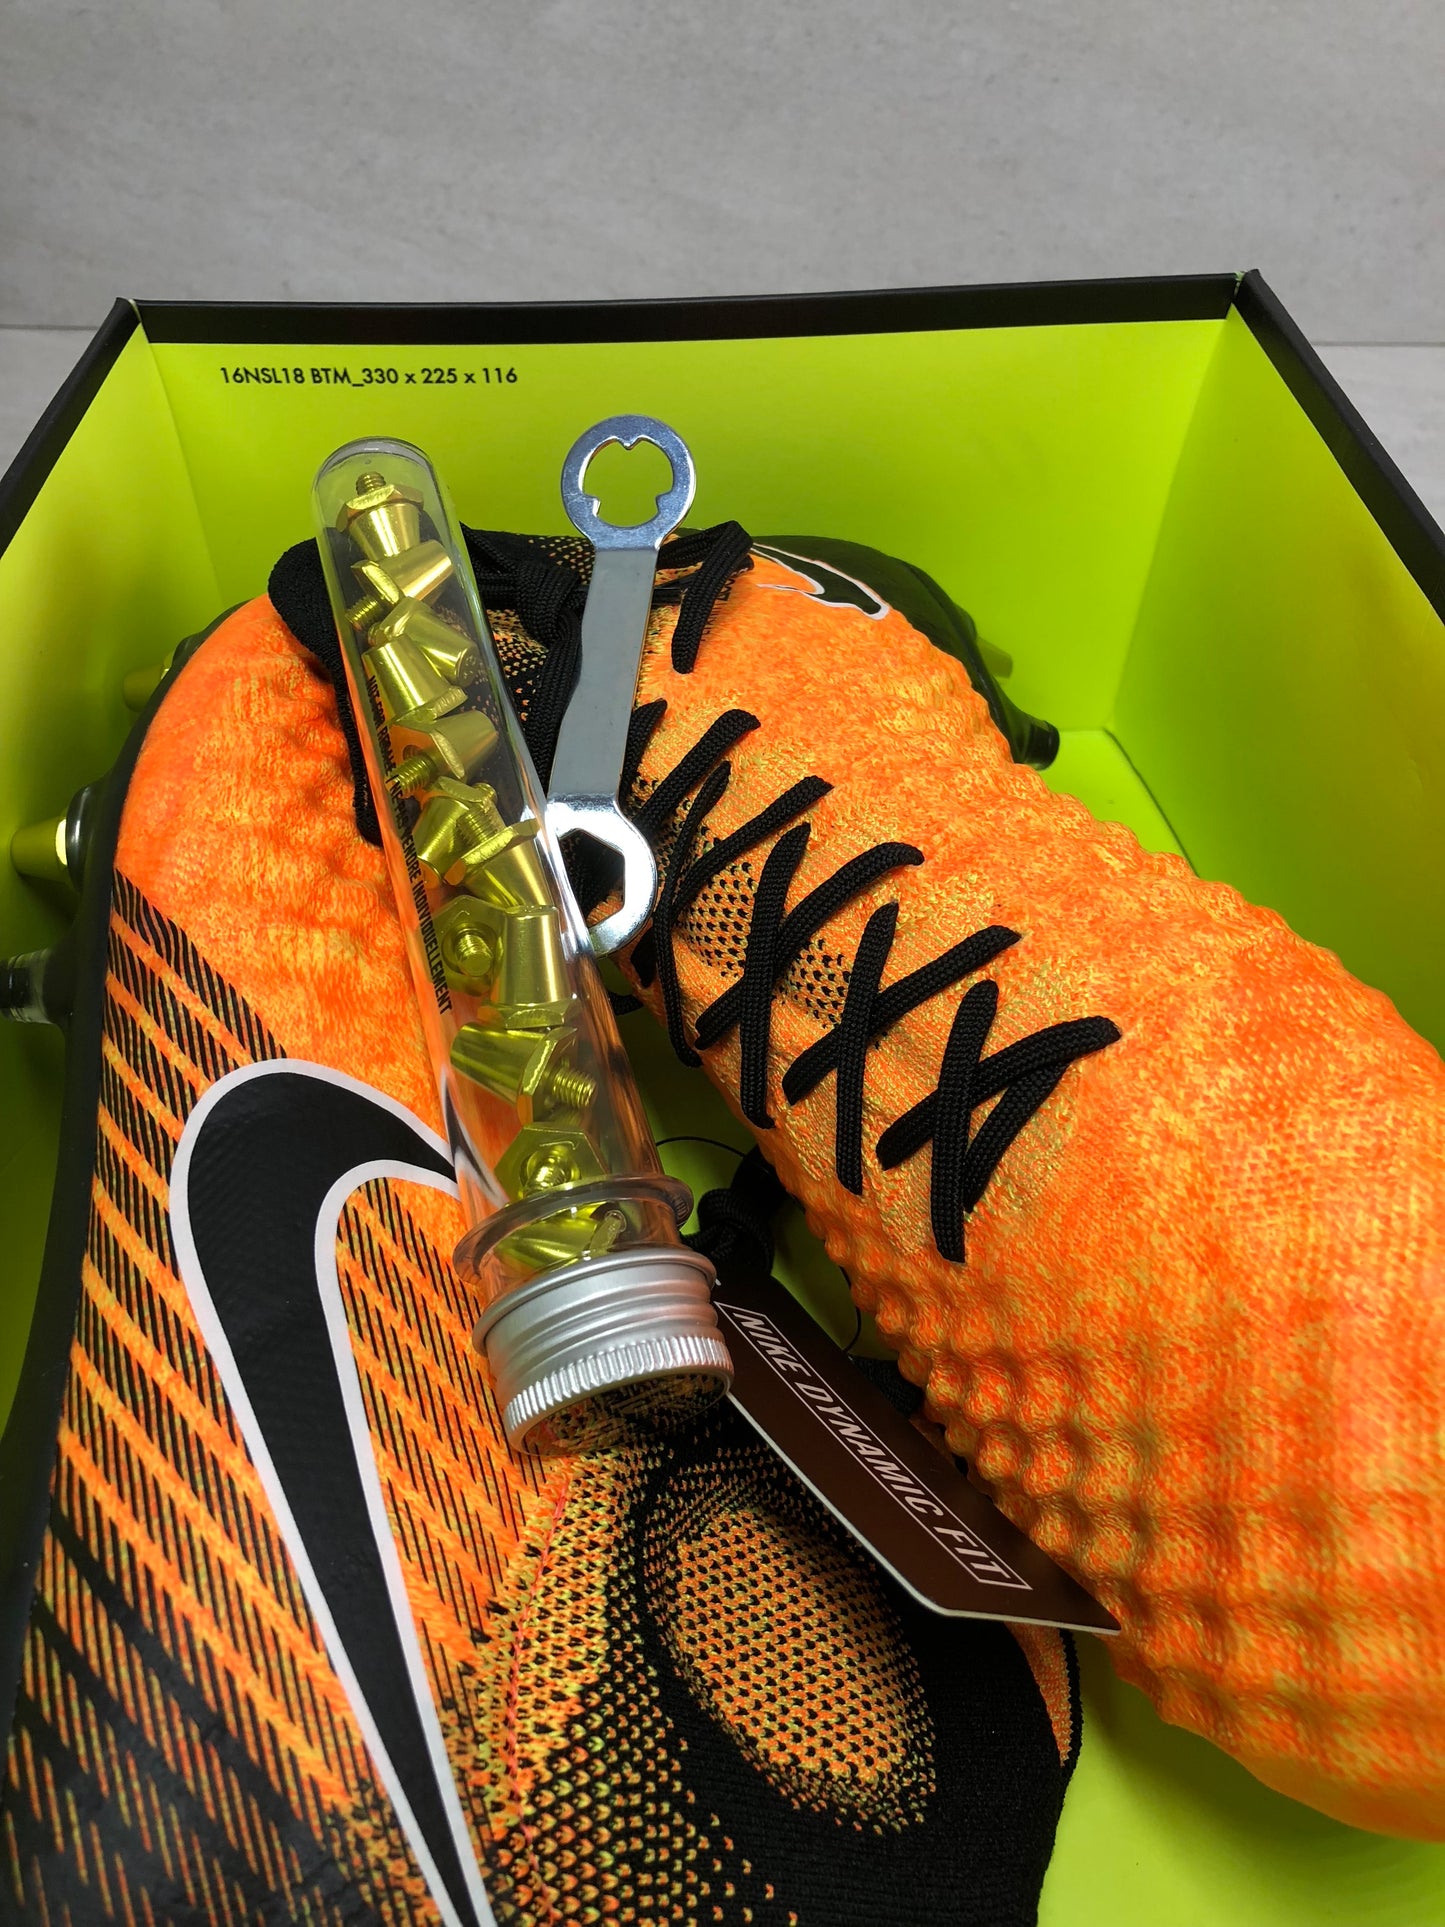 Nike Magista Obra II SG Pro - 869482 802 - Botas de fútbol para hombre Talla 8/9 Laser Naranja Negro Blanco